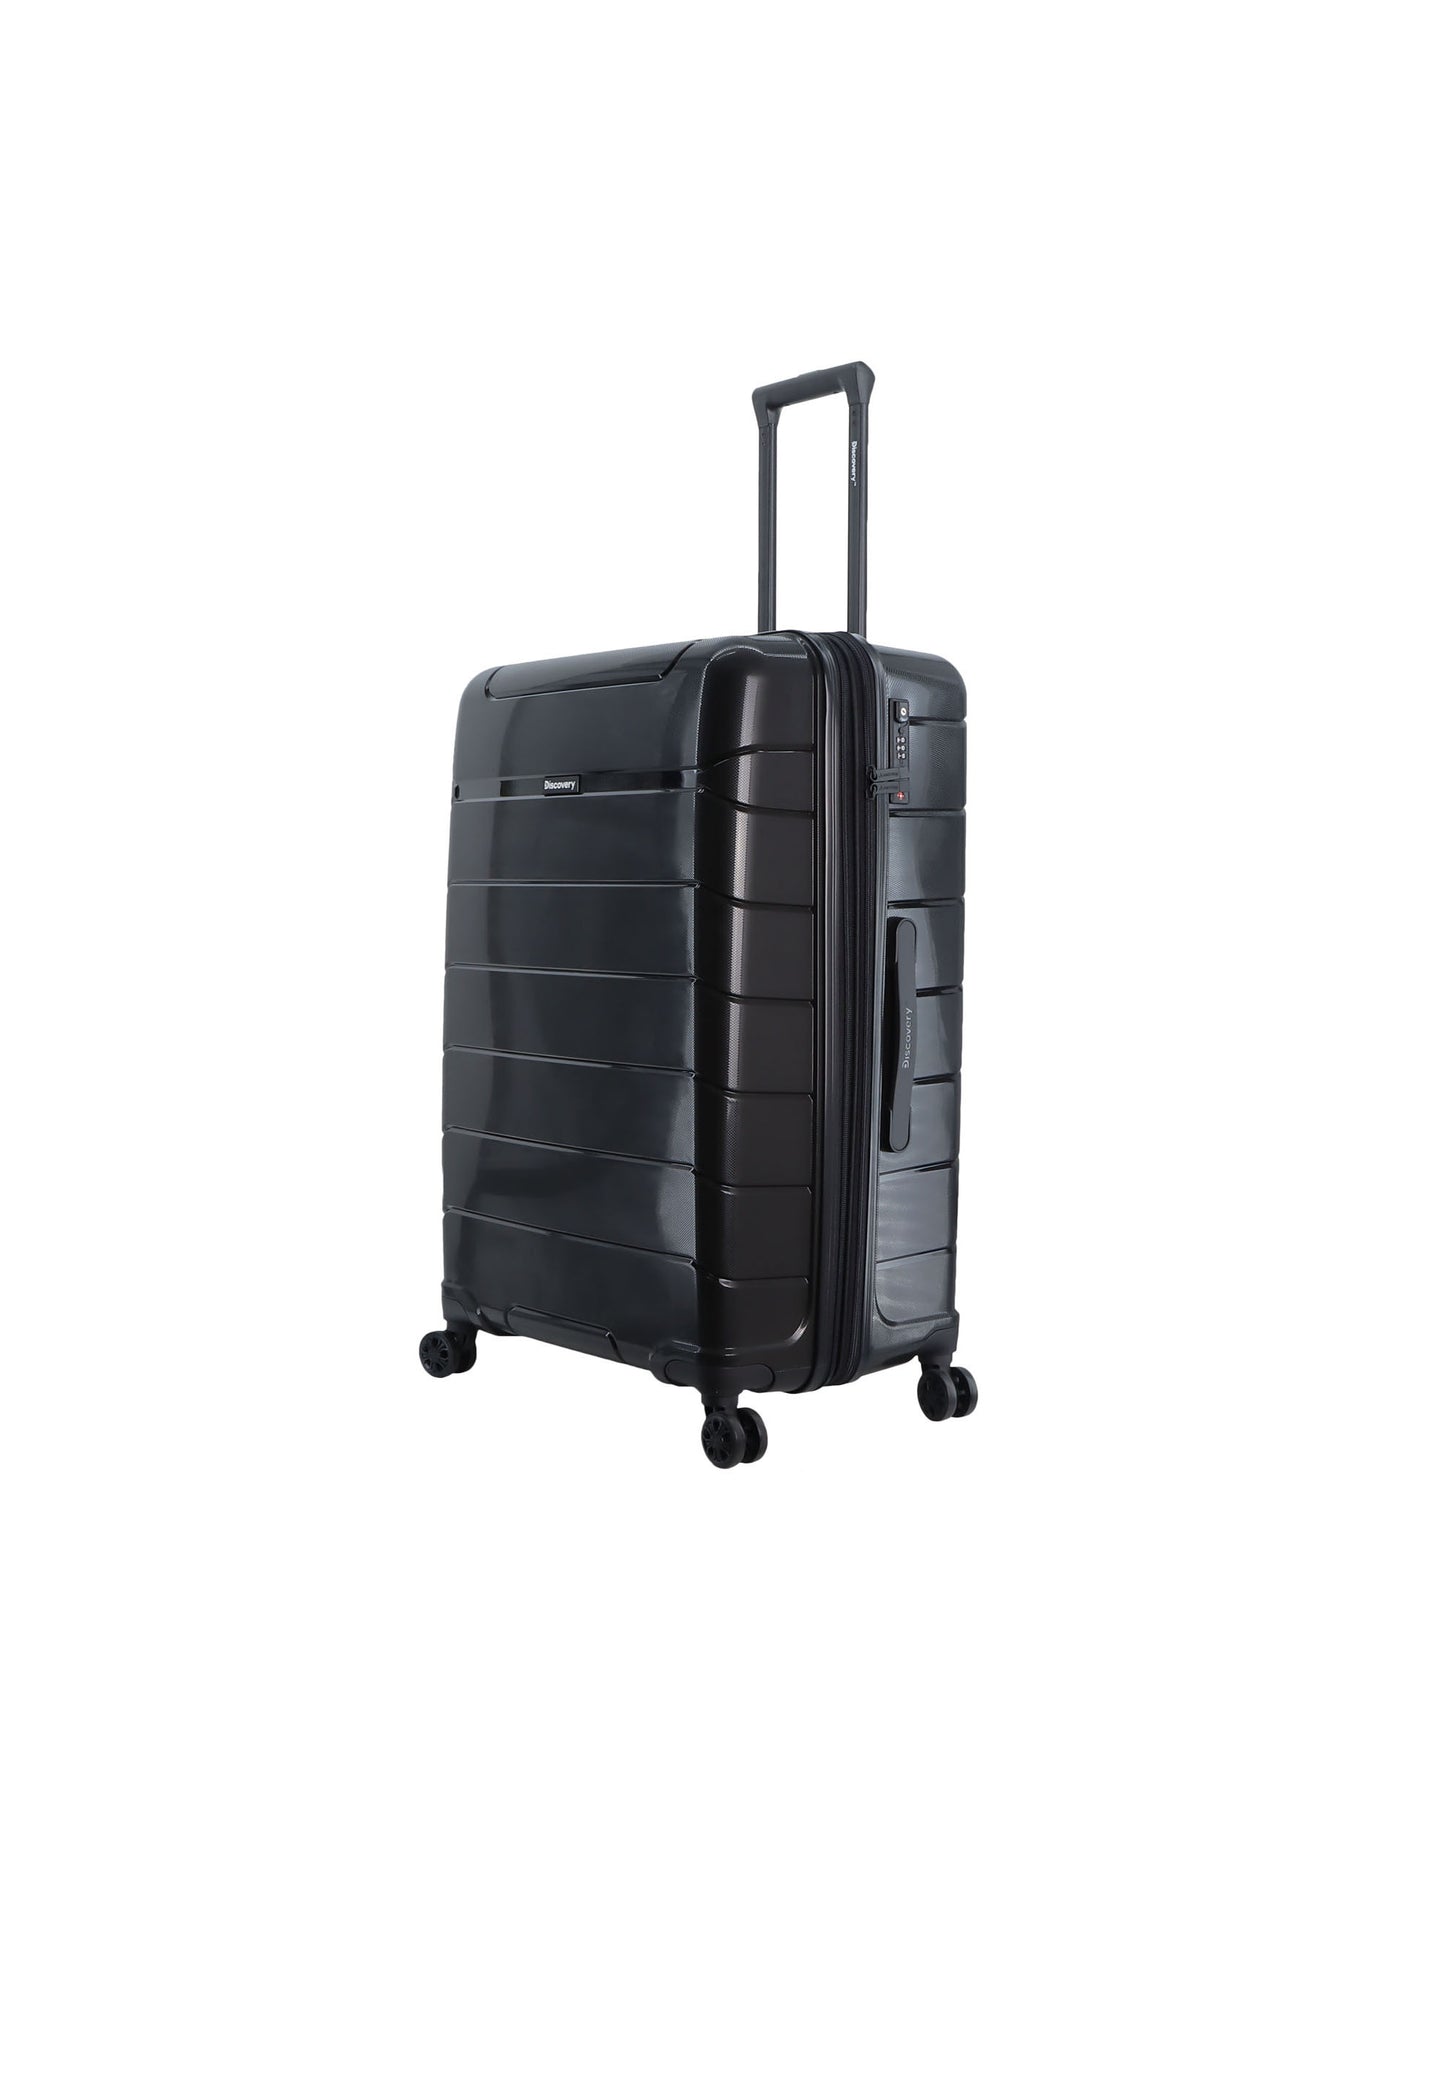 Valise rigide / trolley / valise de voyage Discovery Skyward - 75 cm (grande) - Noir